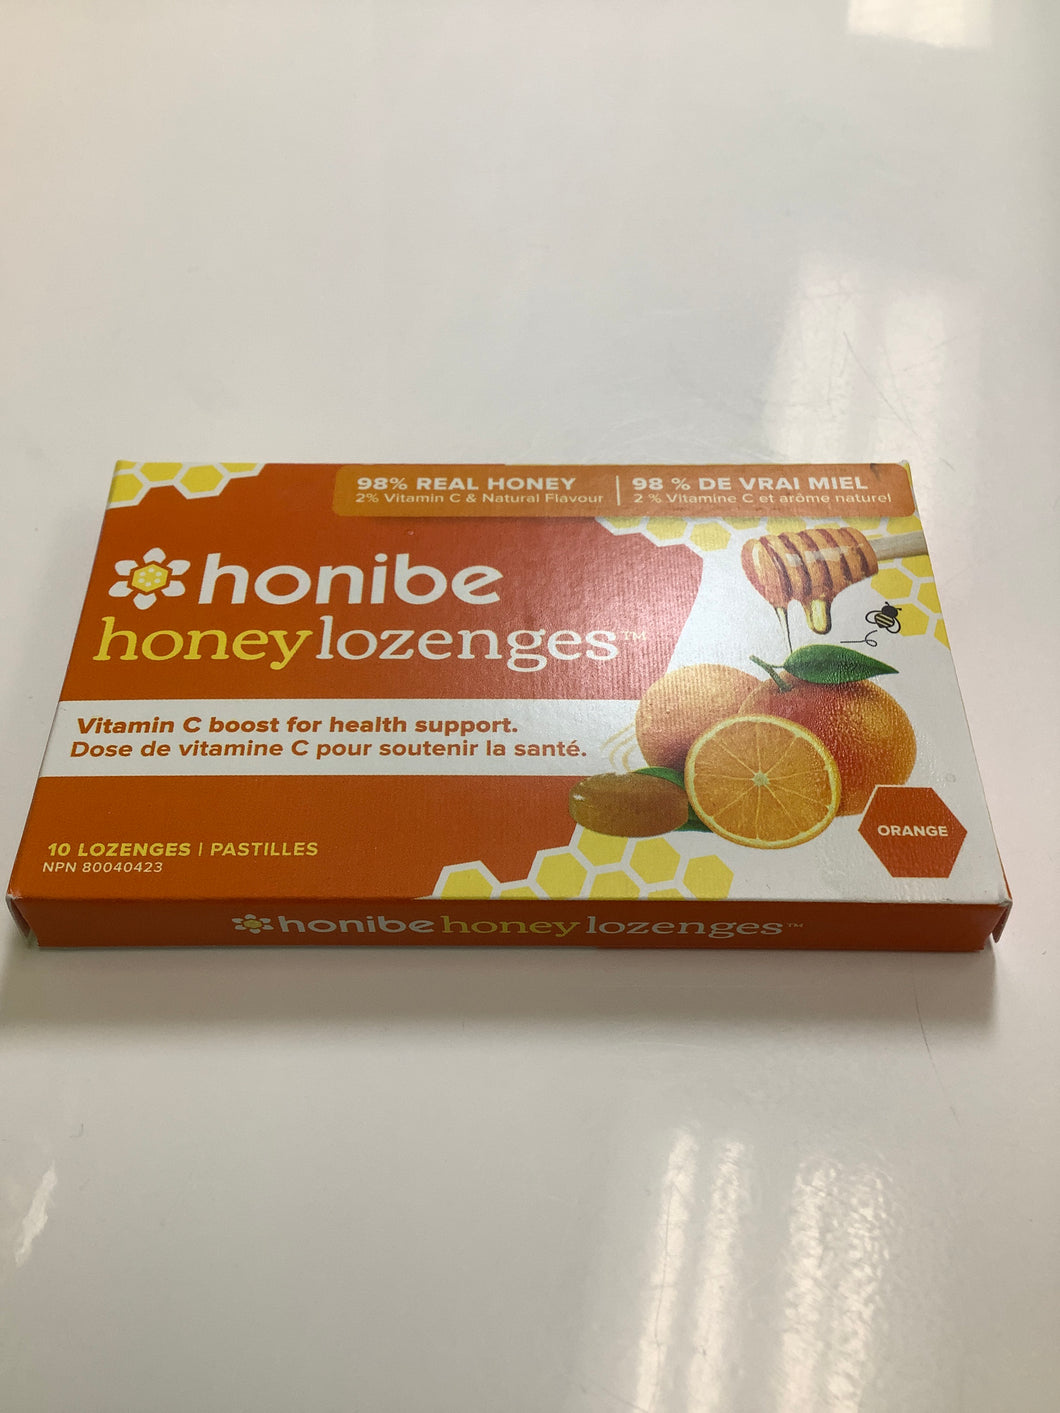 Honibe honey lozenges